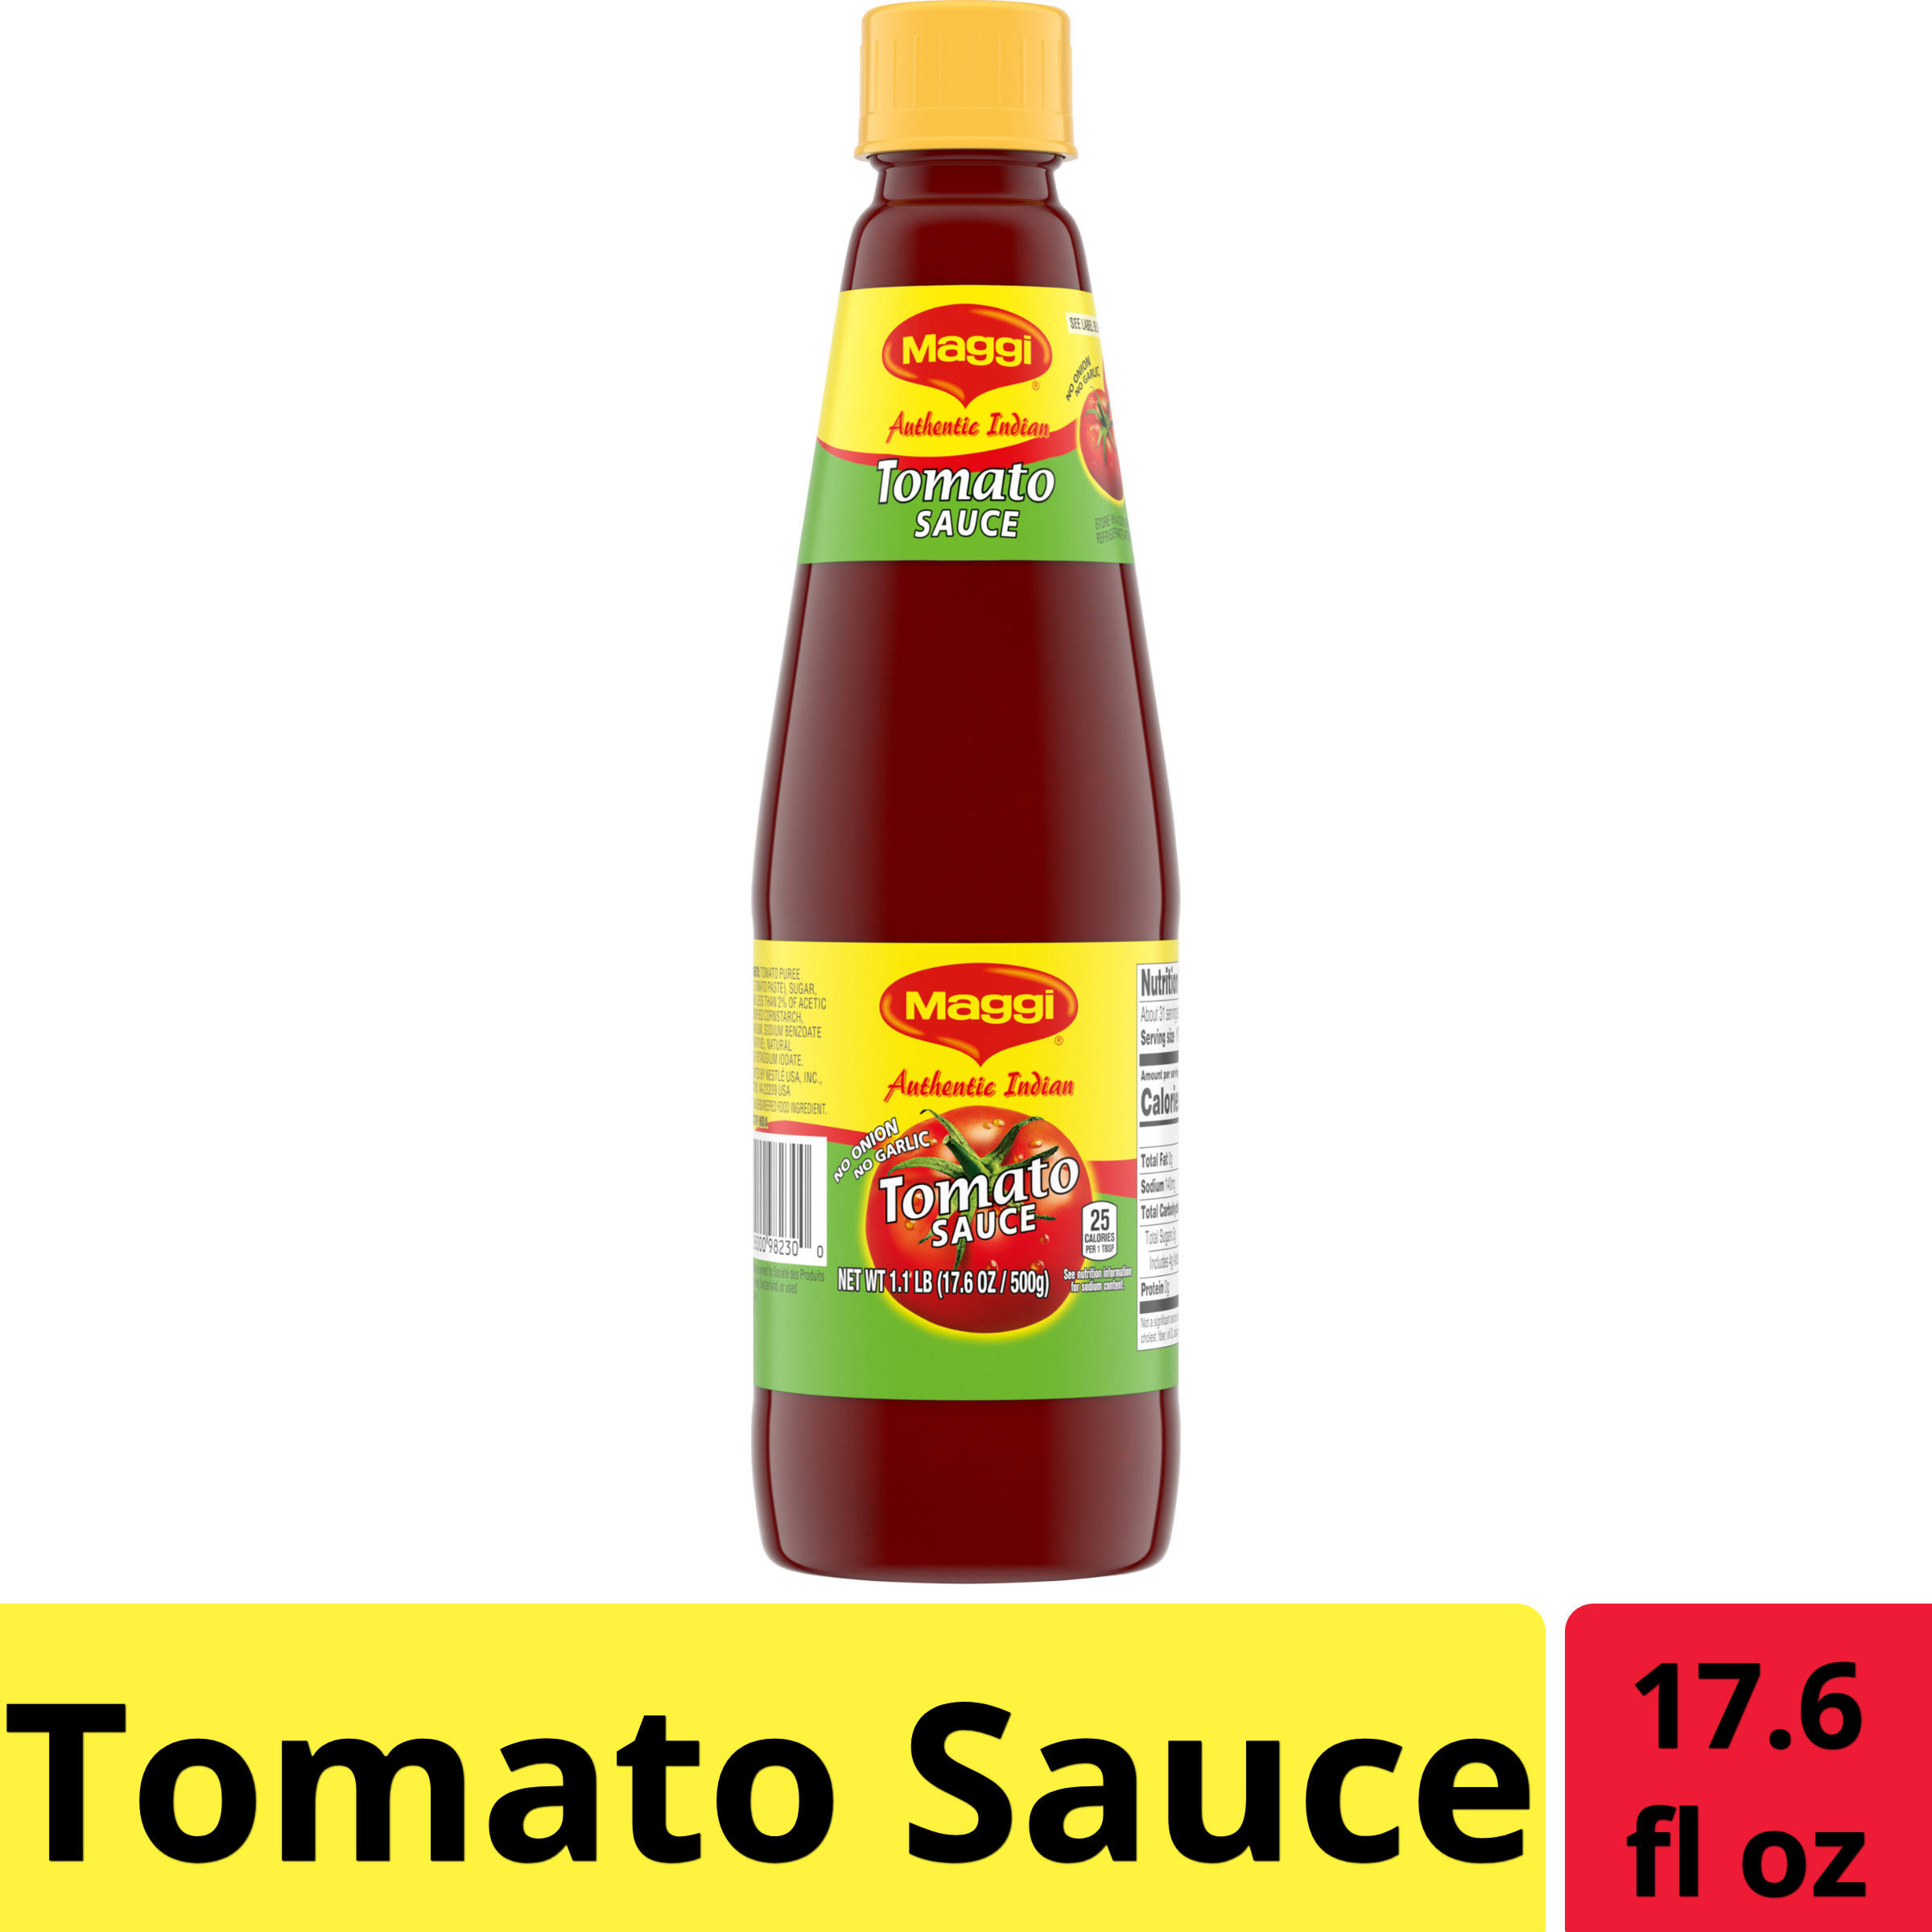 Maggi Tomato Sauce, Indian - 1.1 lb